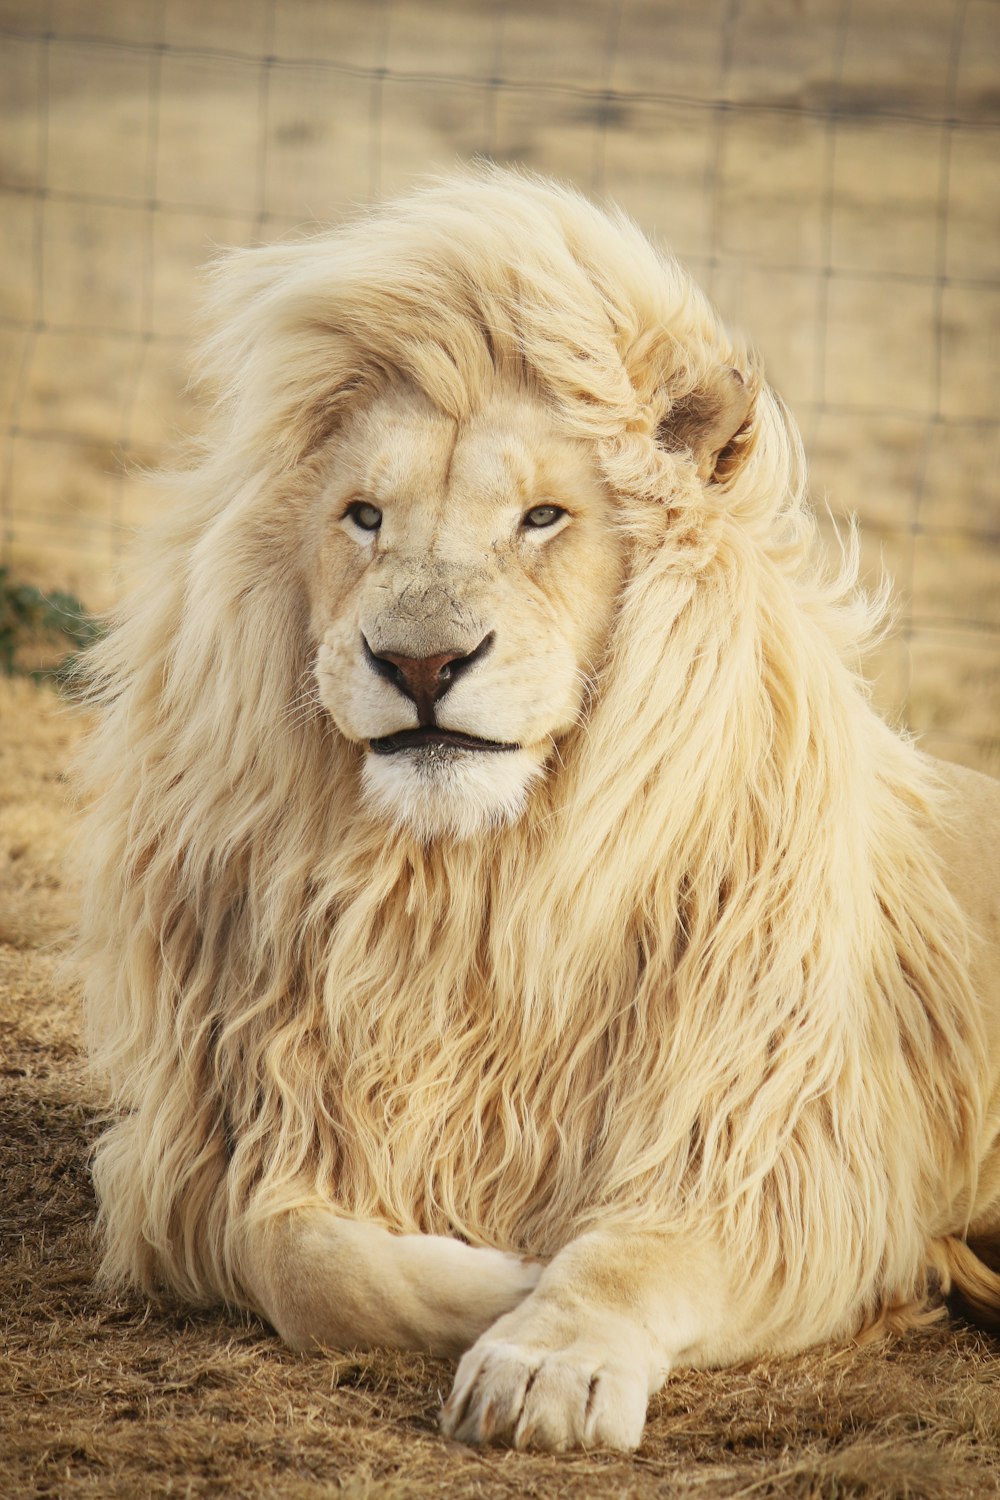 750 Lion King Pictures Download Free Images On Unsplash